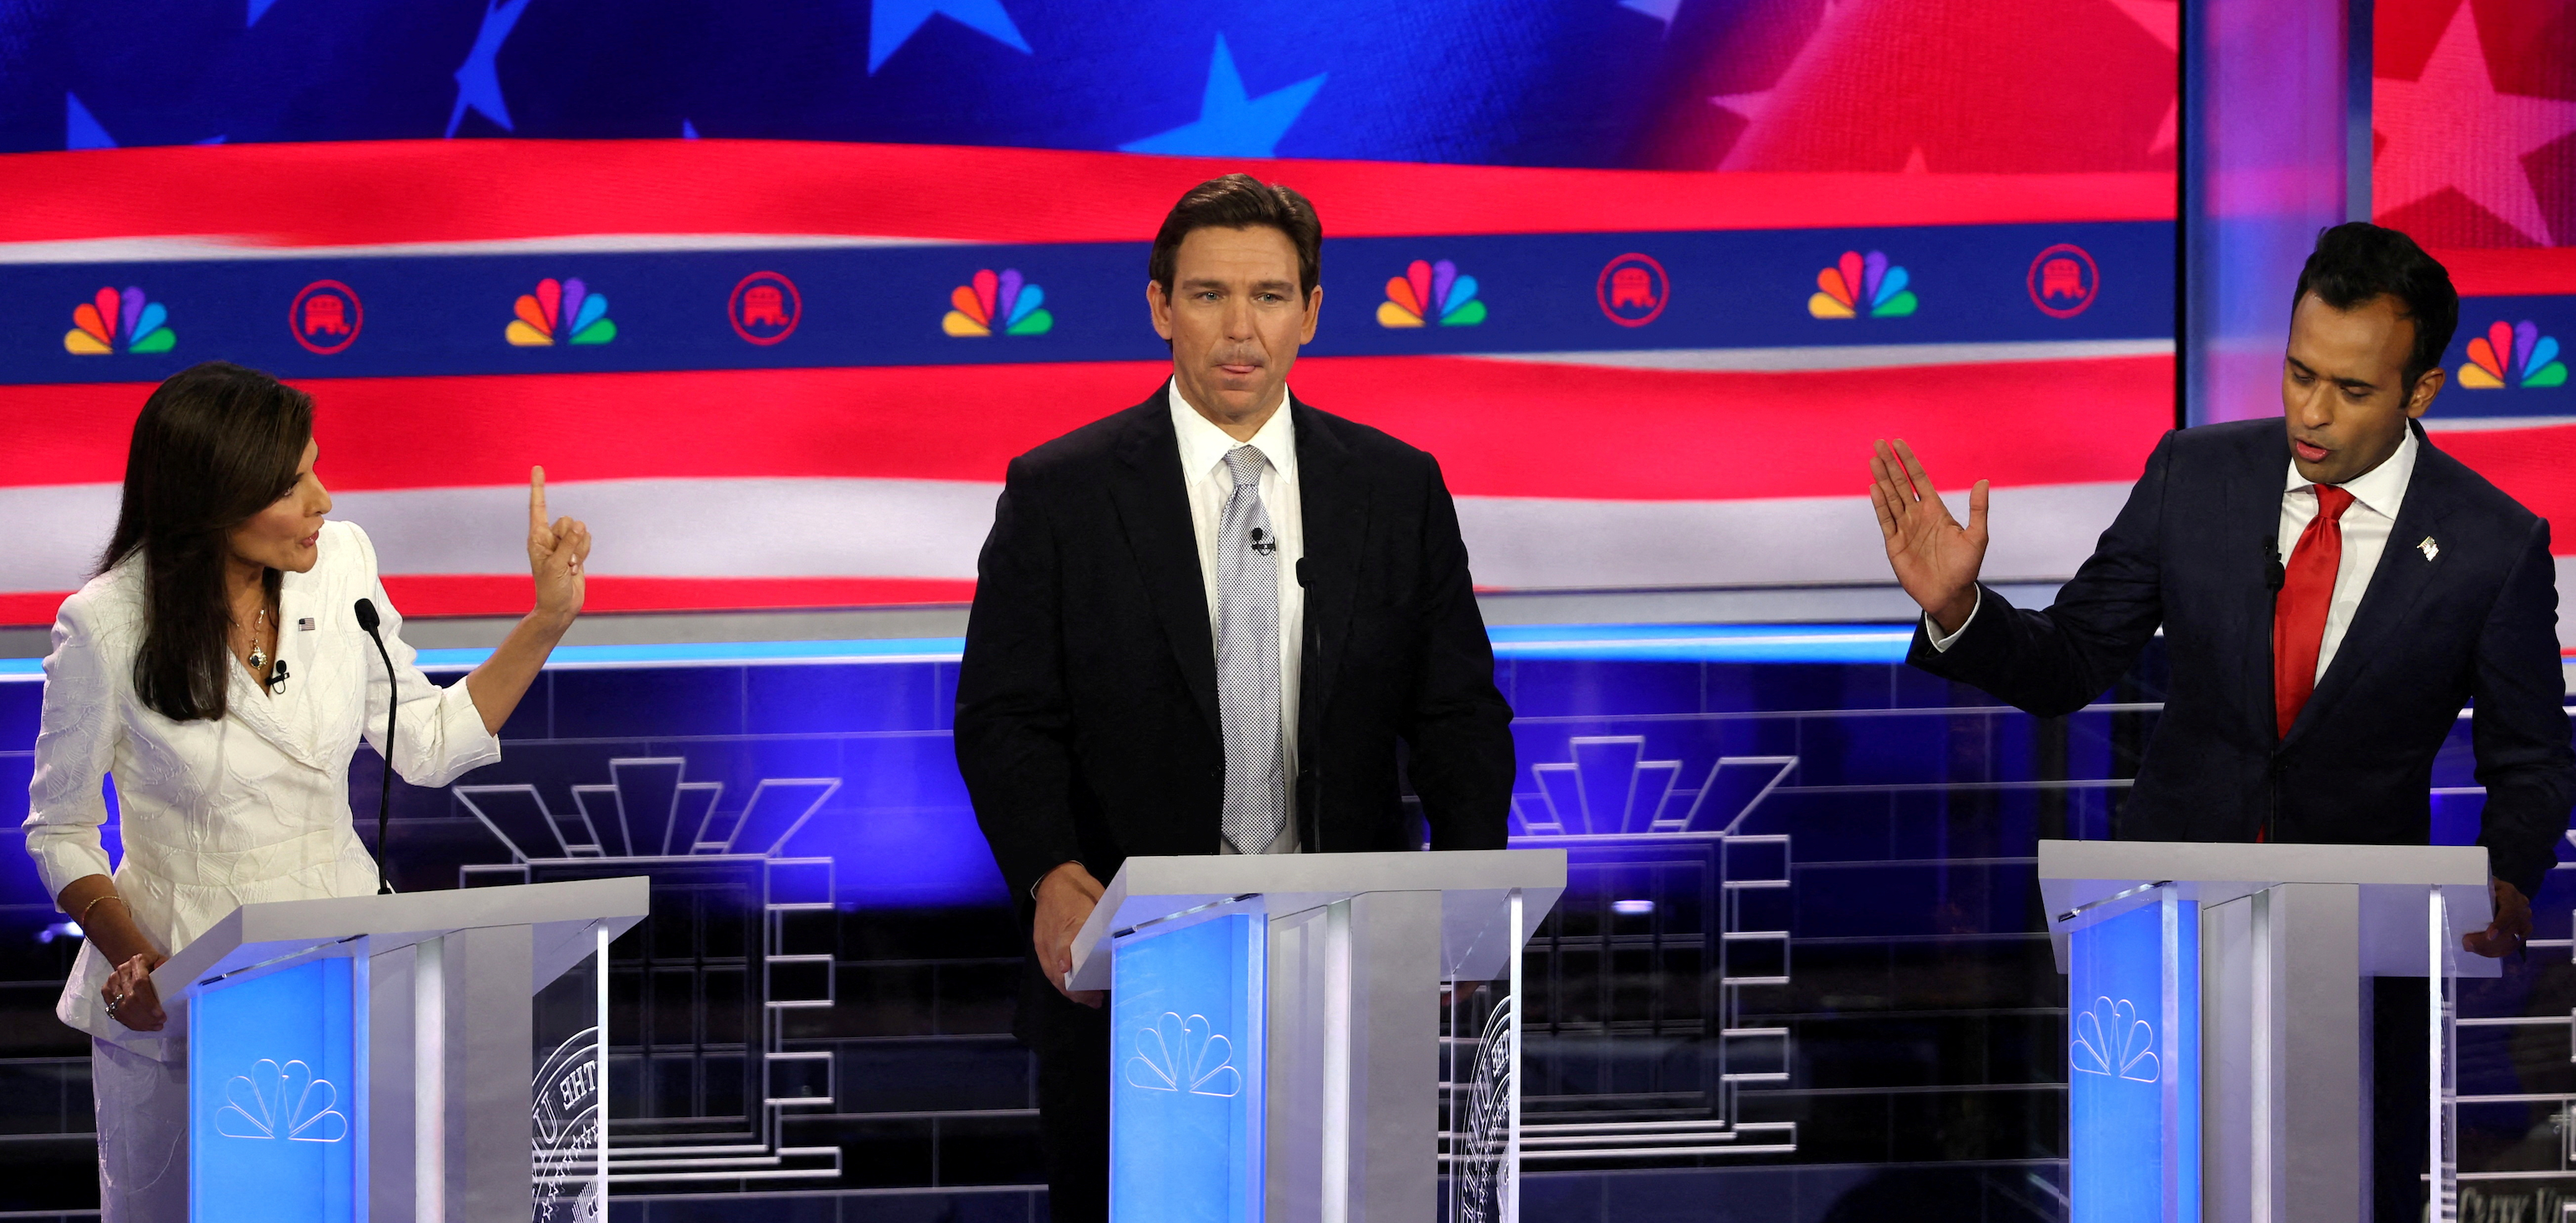 Trump's GOP rivals clash at debate